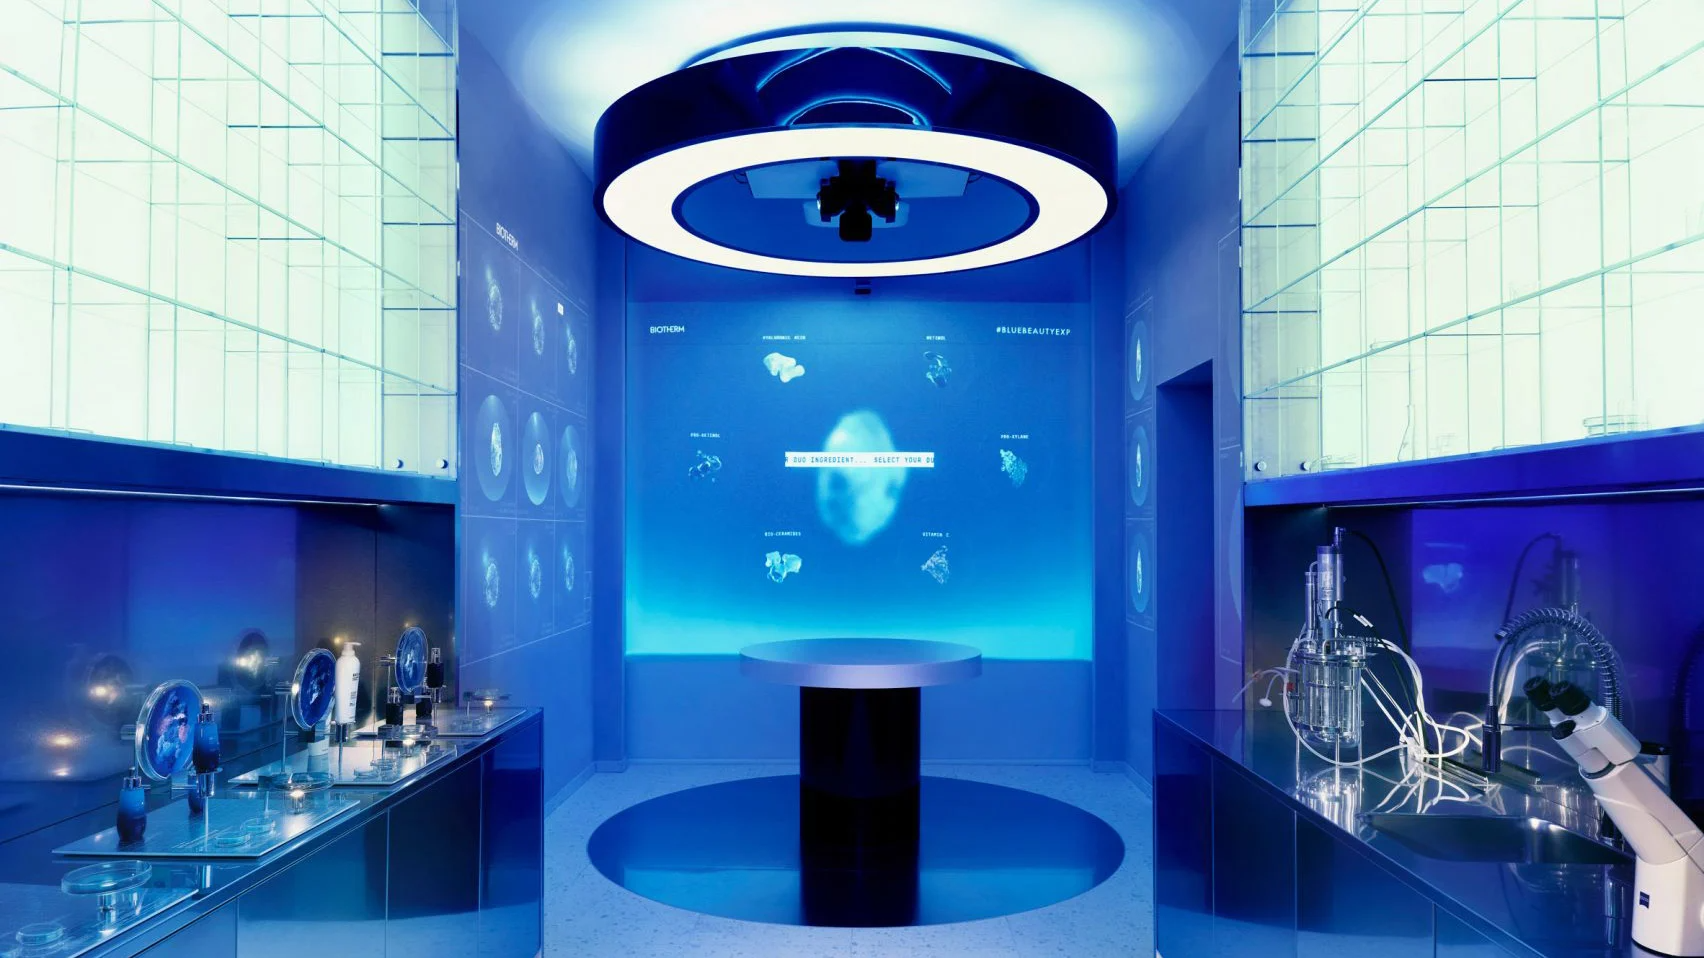 biotherm-skincare-concept-store-interiors-monaco-universal-design-studio_dezeen_2364_col_3-1704x1096-b-1